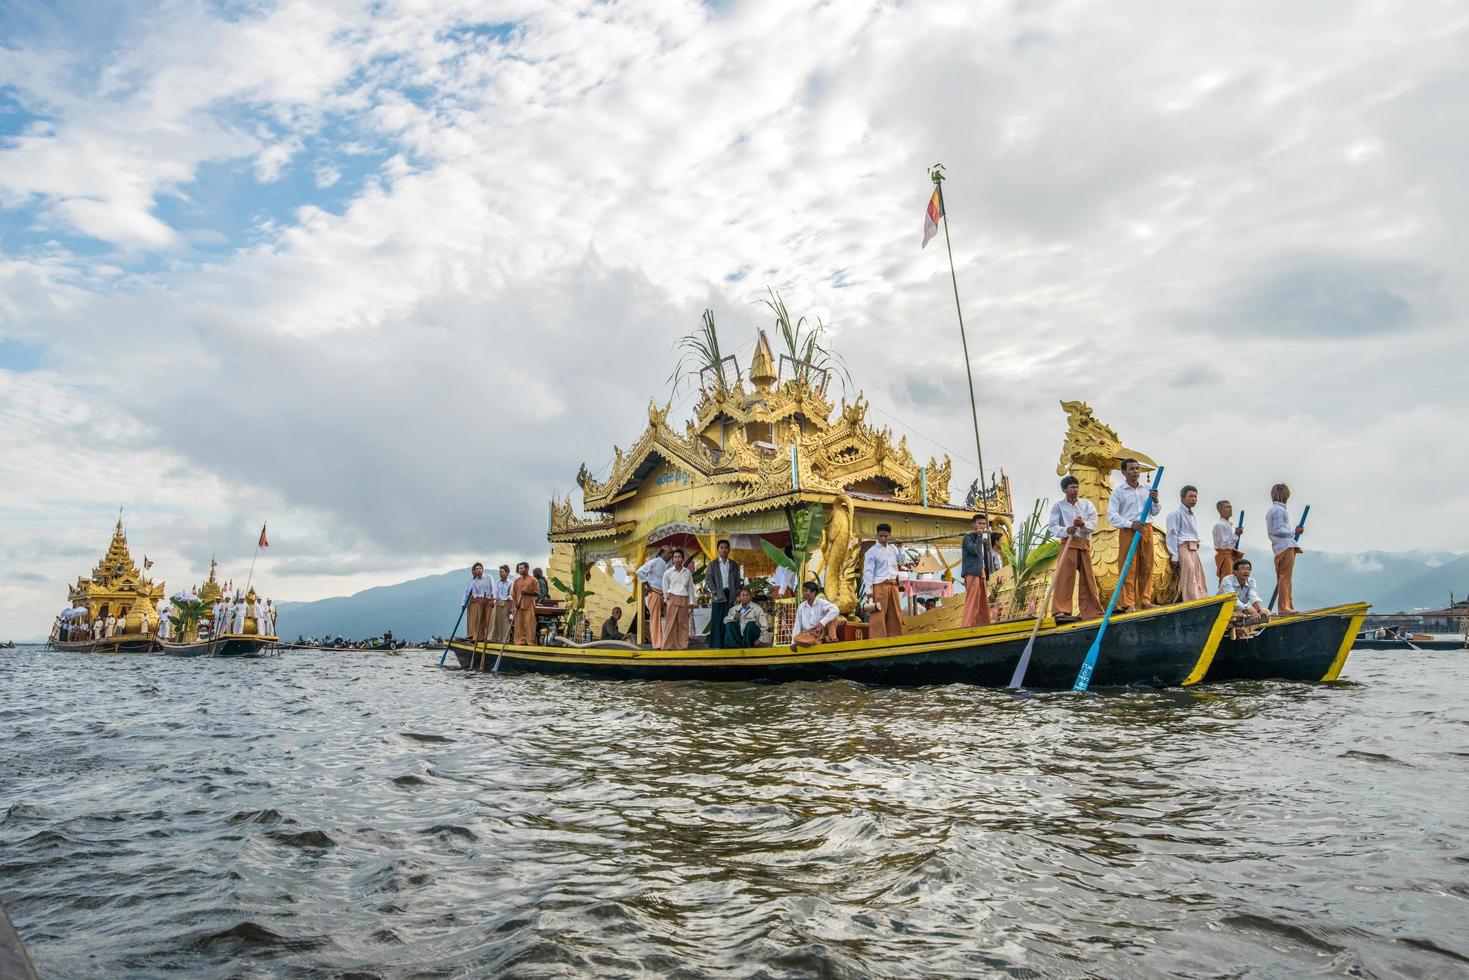 inle-lake, myanmar - 06 de outubro de 2014 - o festival de phaung daw oo pagode no lago inle é uma vez por ano remado cerimonialmente ao redor do lago. foto